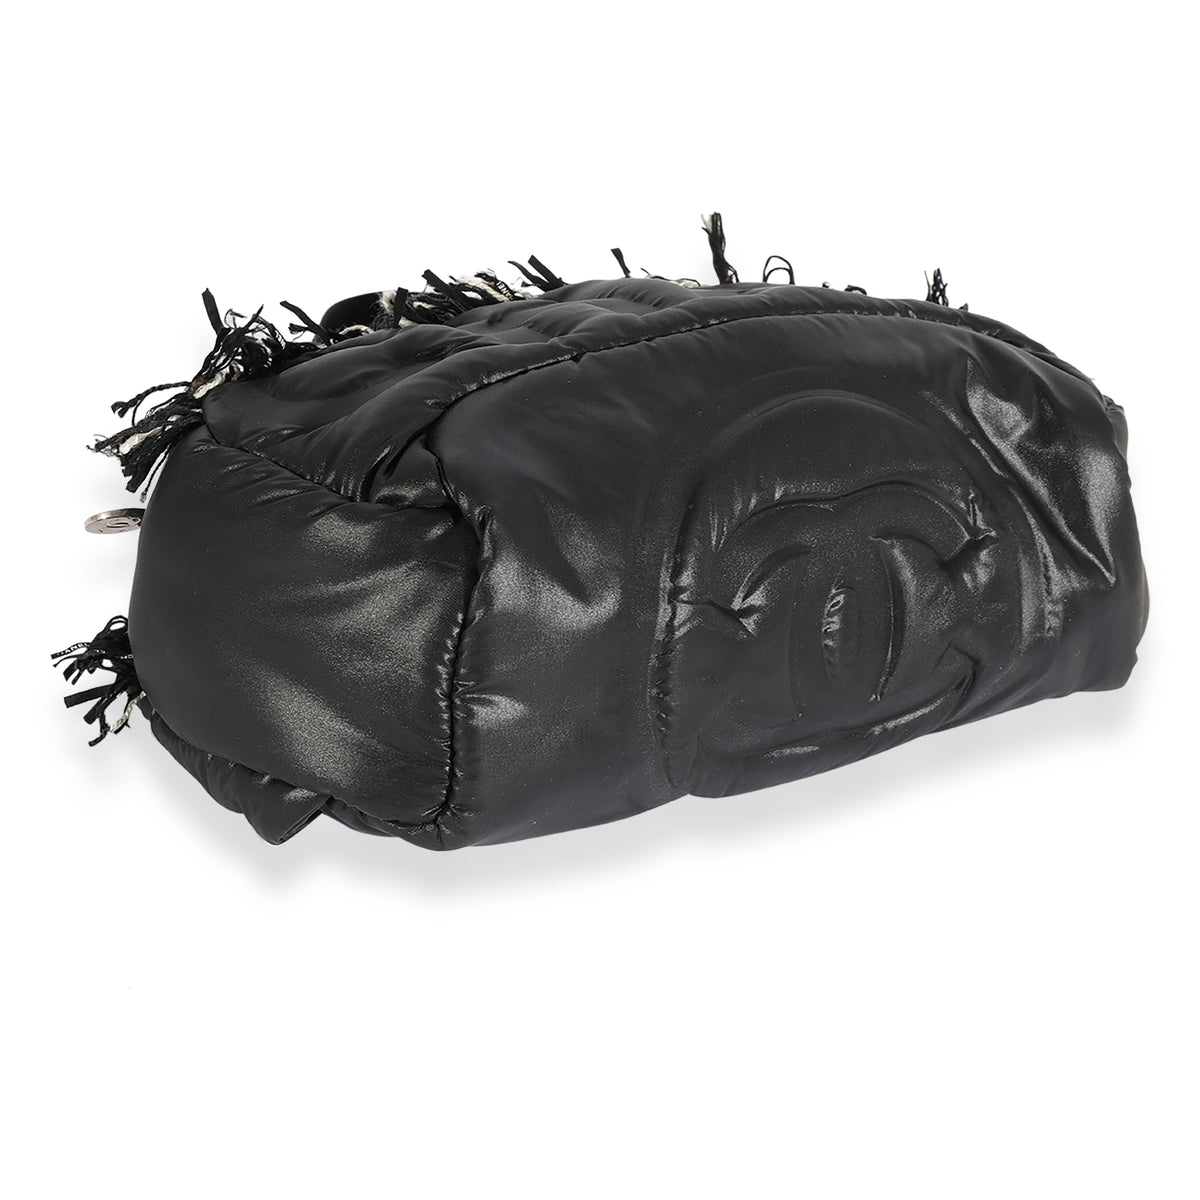 Chanel Puffer Bag